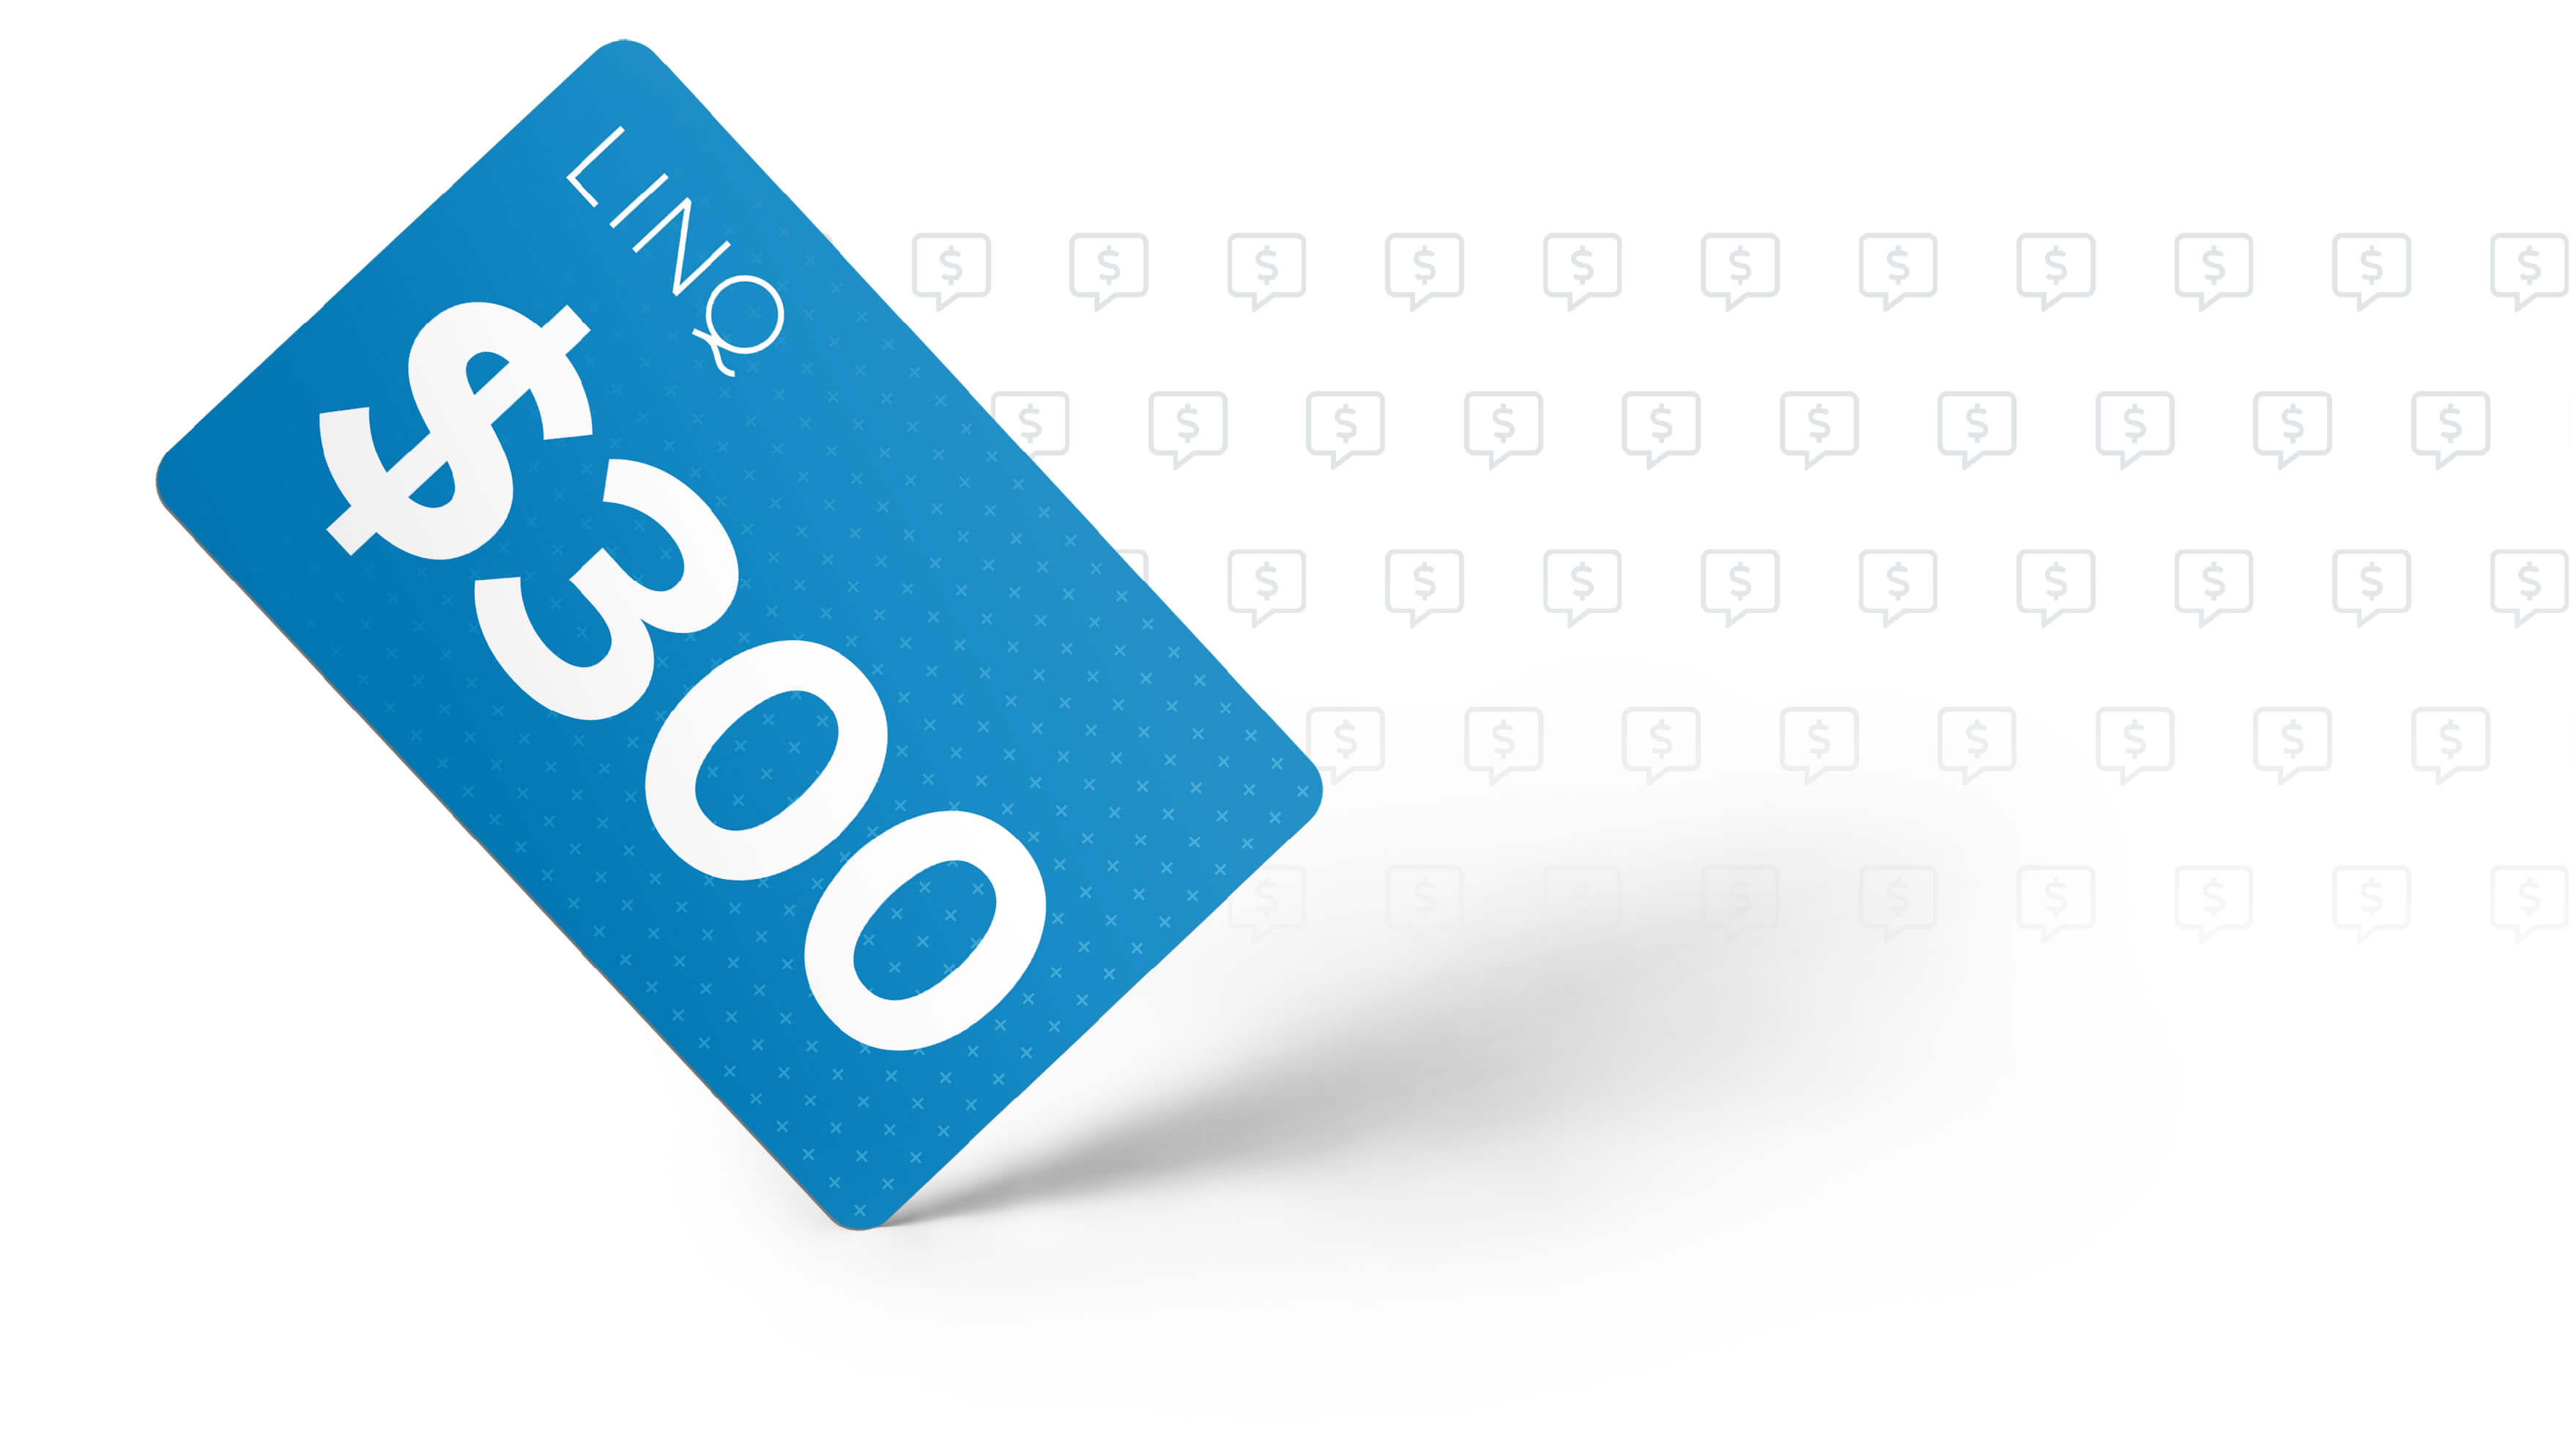 $300 LINQ reward card